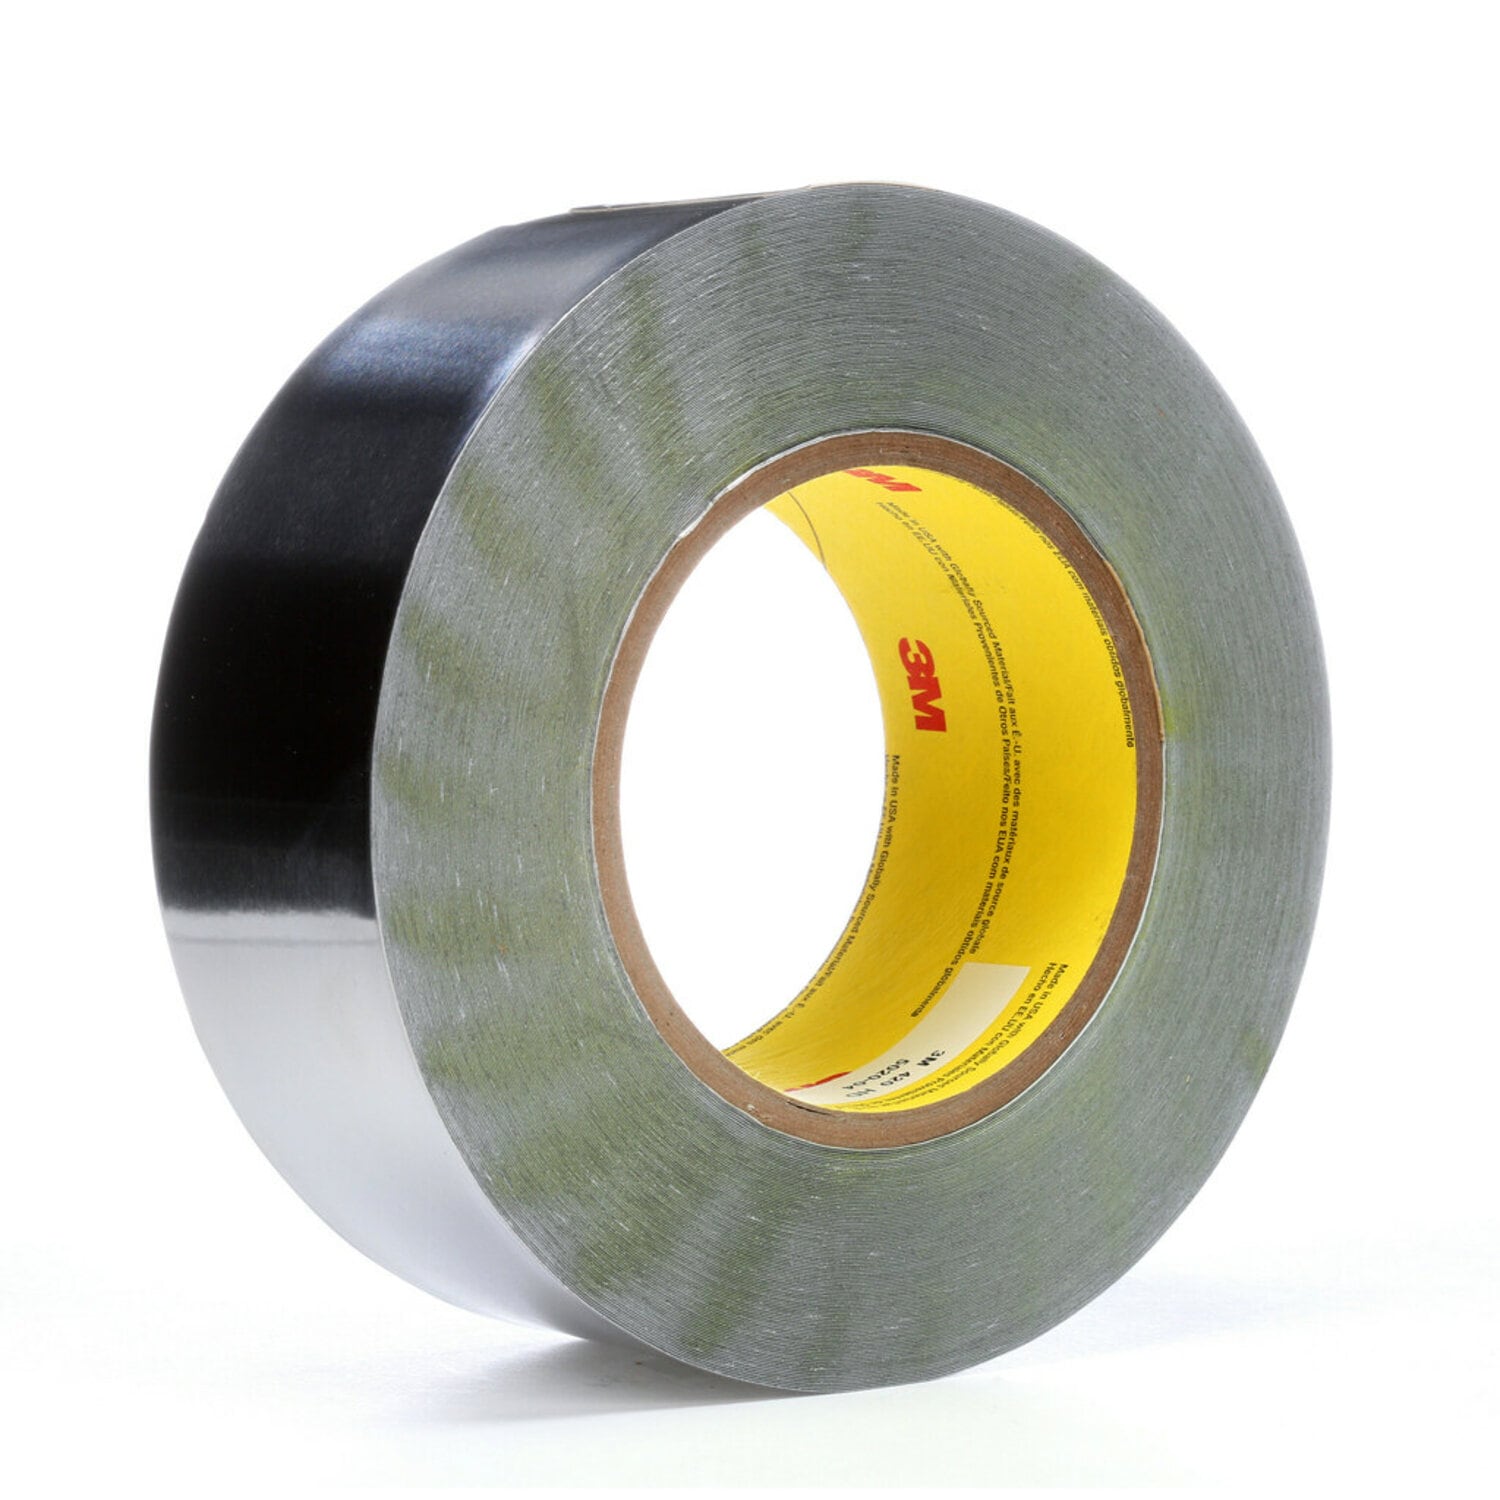 7100219357 - 3M Lead Foil Tape 420, Dark Silver, 3 in x 36 yd, 6.8 mil, Roll